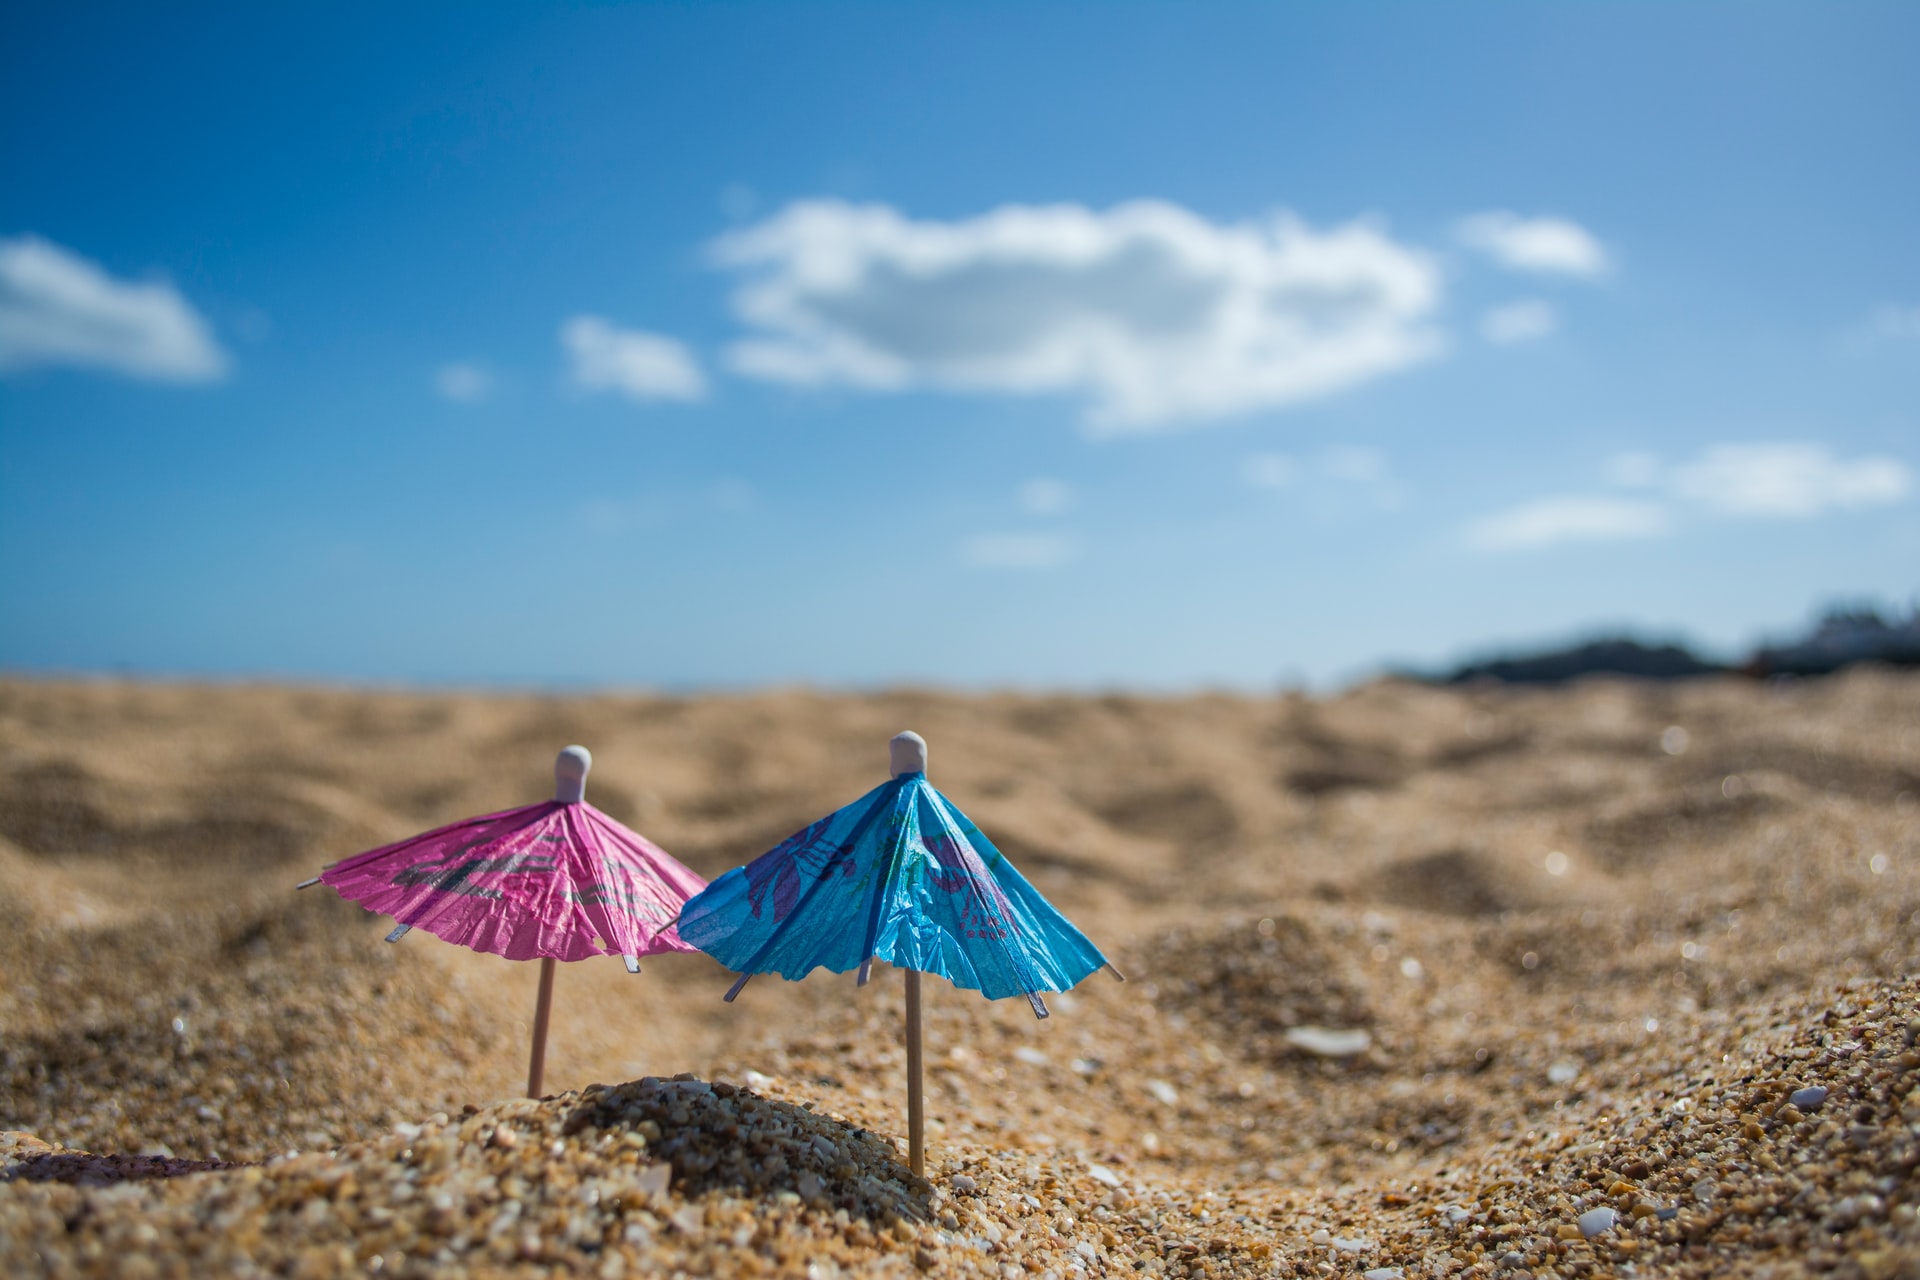 Tiny umbrellas at the beach